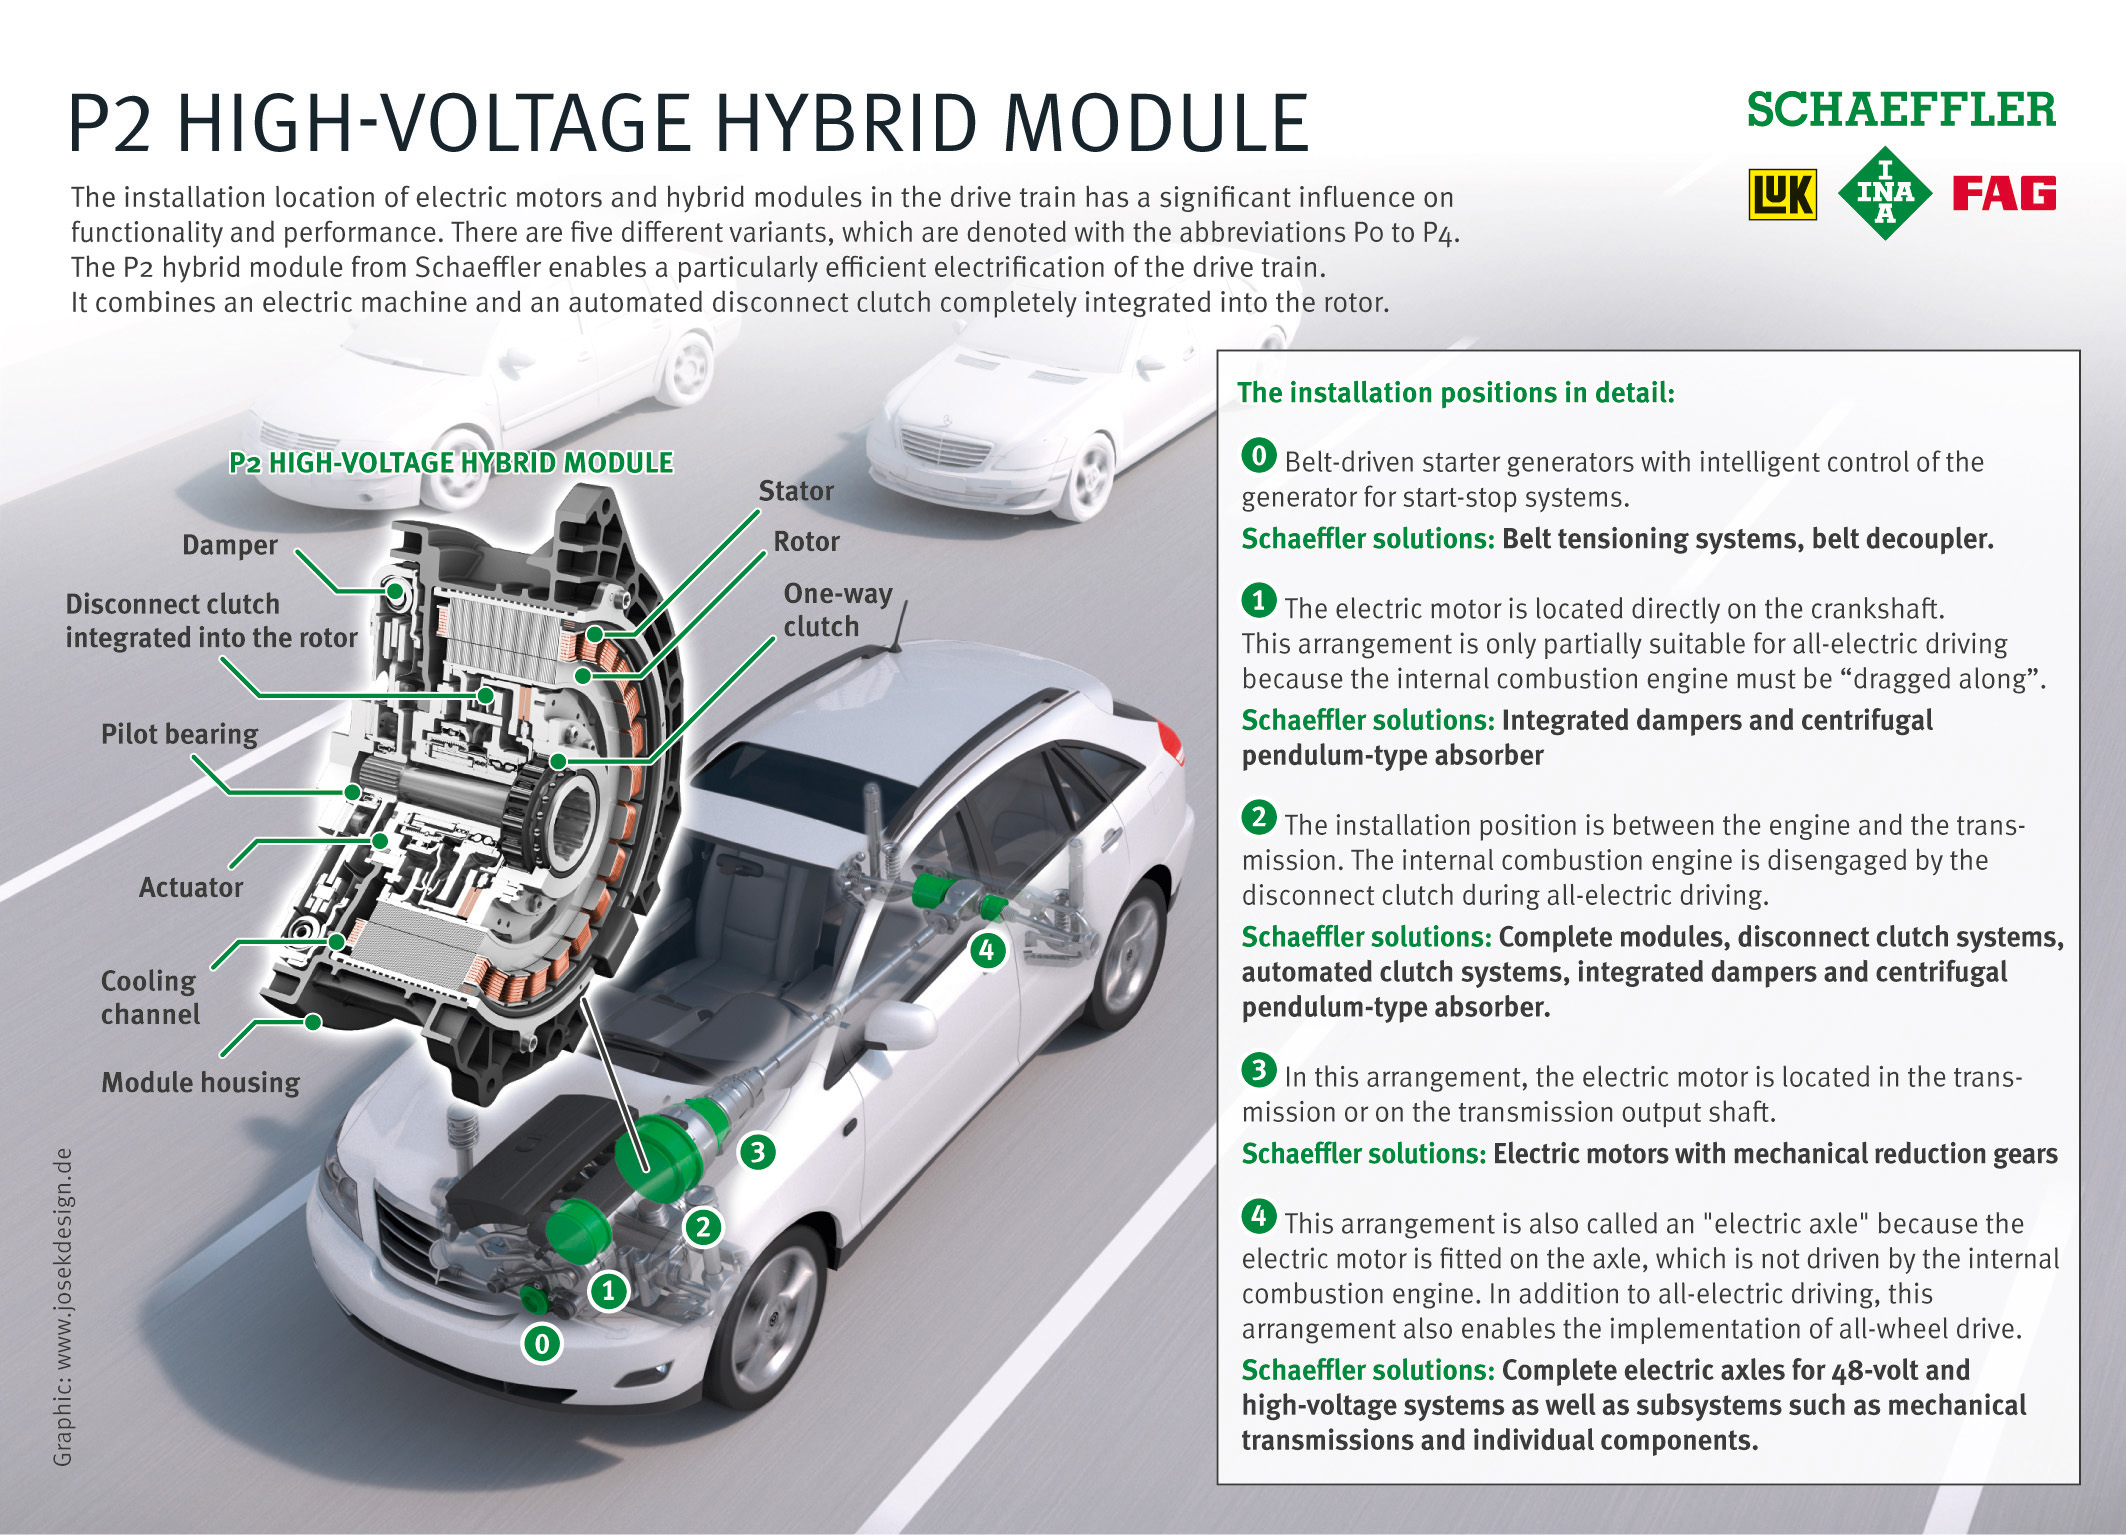 P2 high-voltage hybrid module infographic